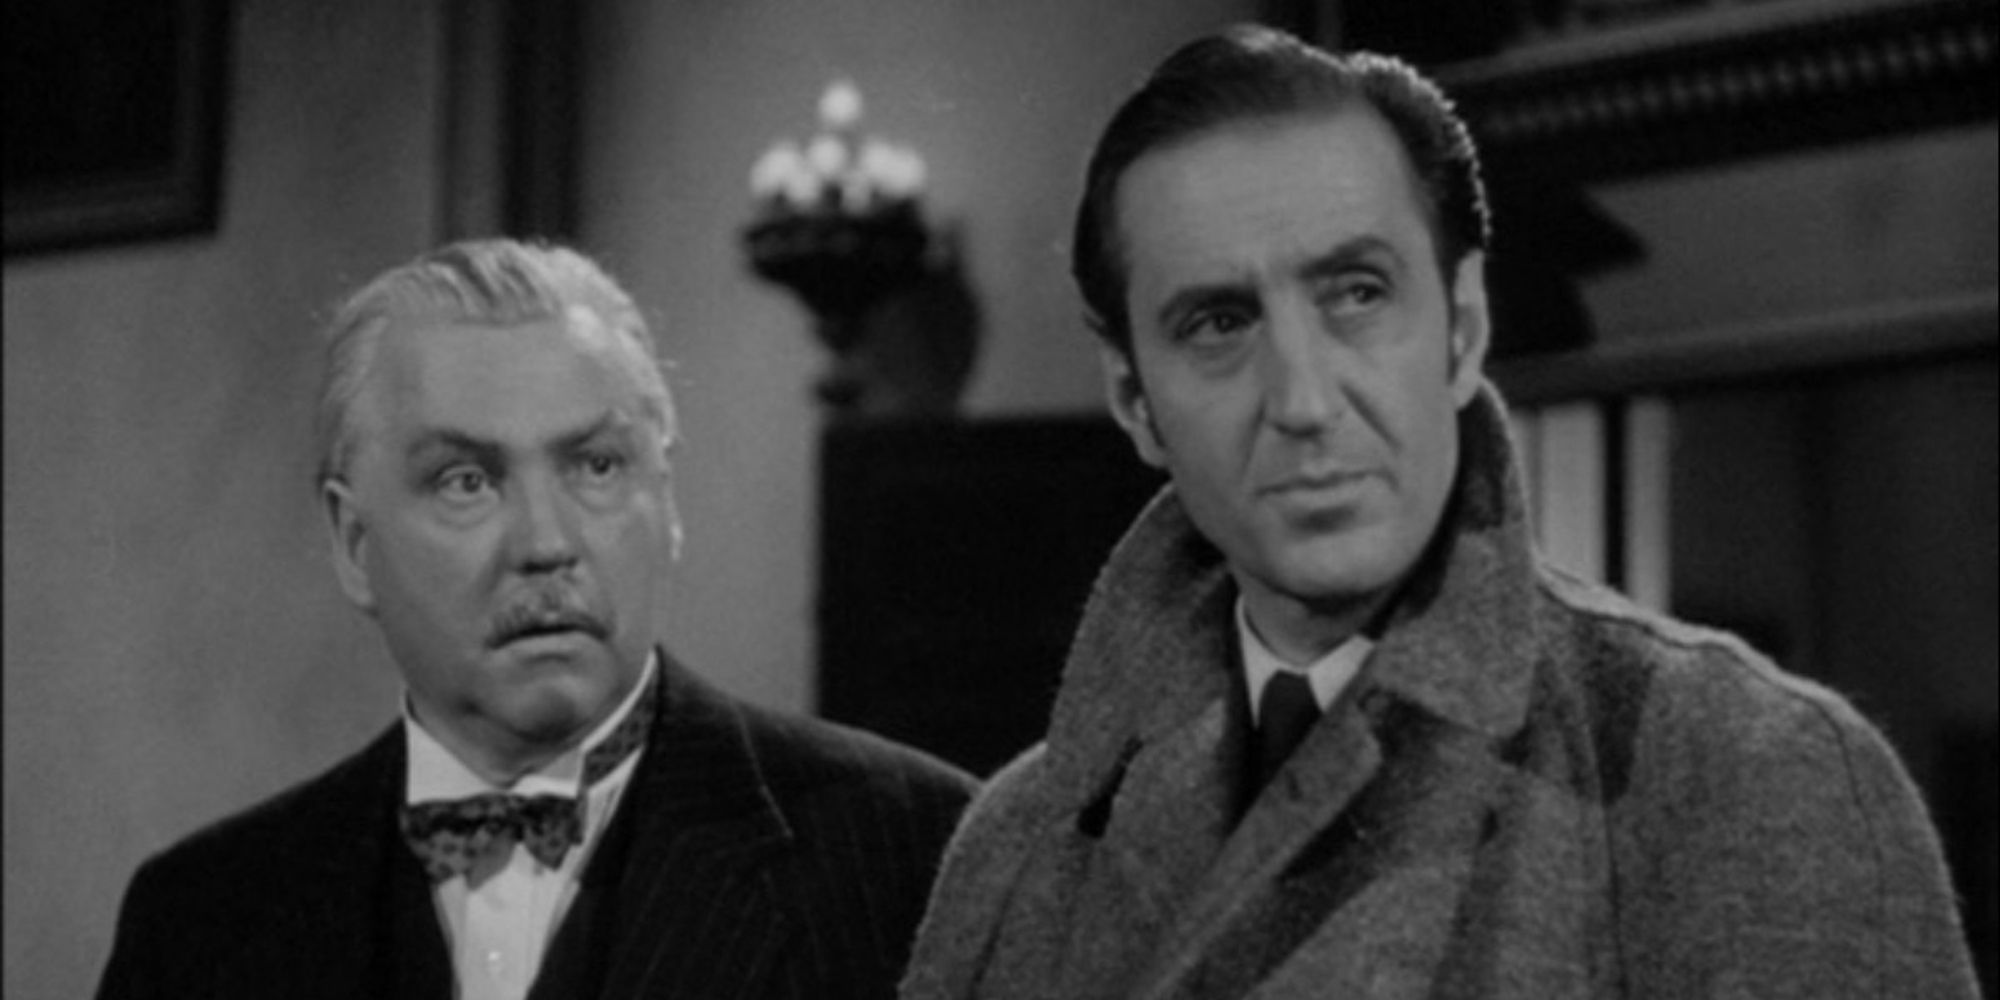 Basil Rathbone as Sherlock Holmes in the Musgrave Manor